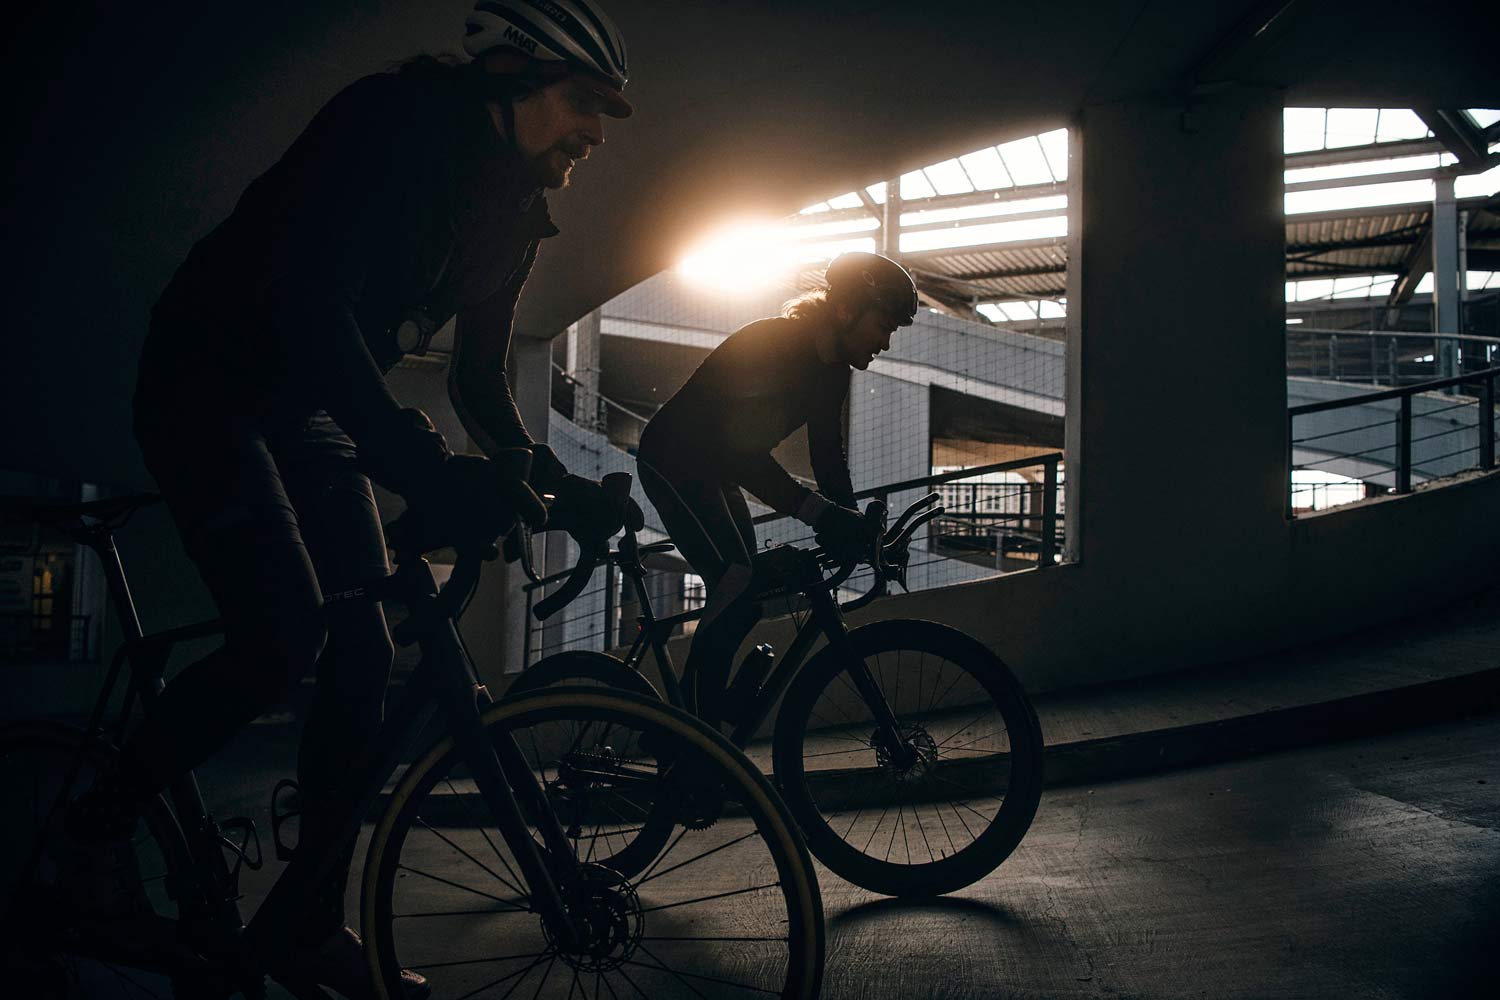 Everesting Berlin in a parkgin garage, Votec CyclingRapha RoadBikeParty, photo by Carlos Meyer